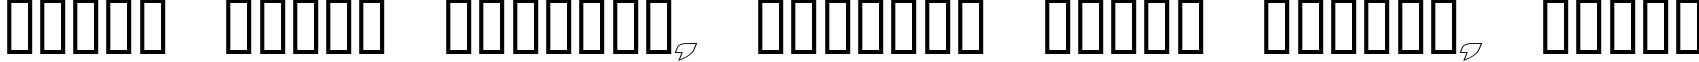 Пример написания шрифтом Excelerate Outline текста на белорусском